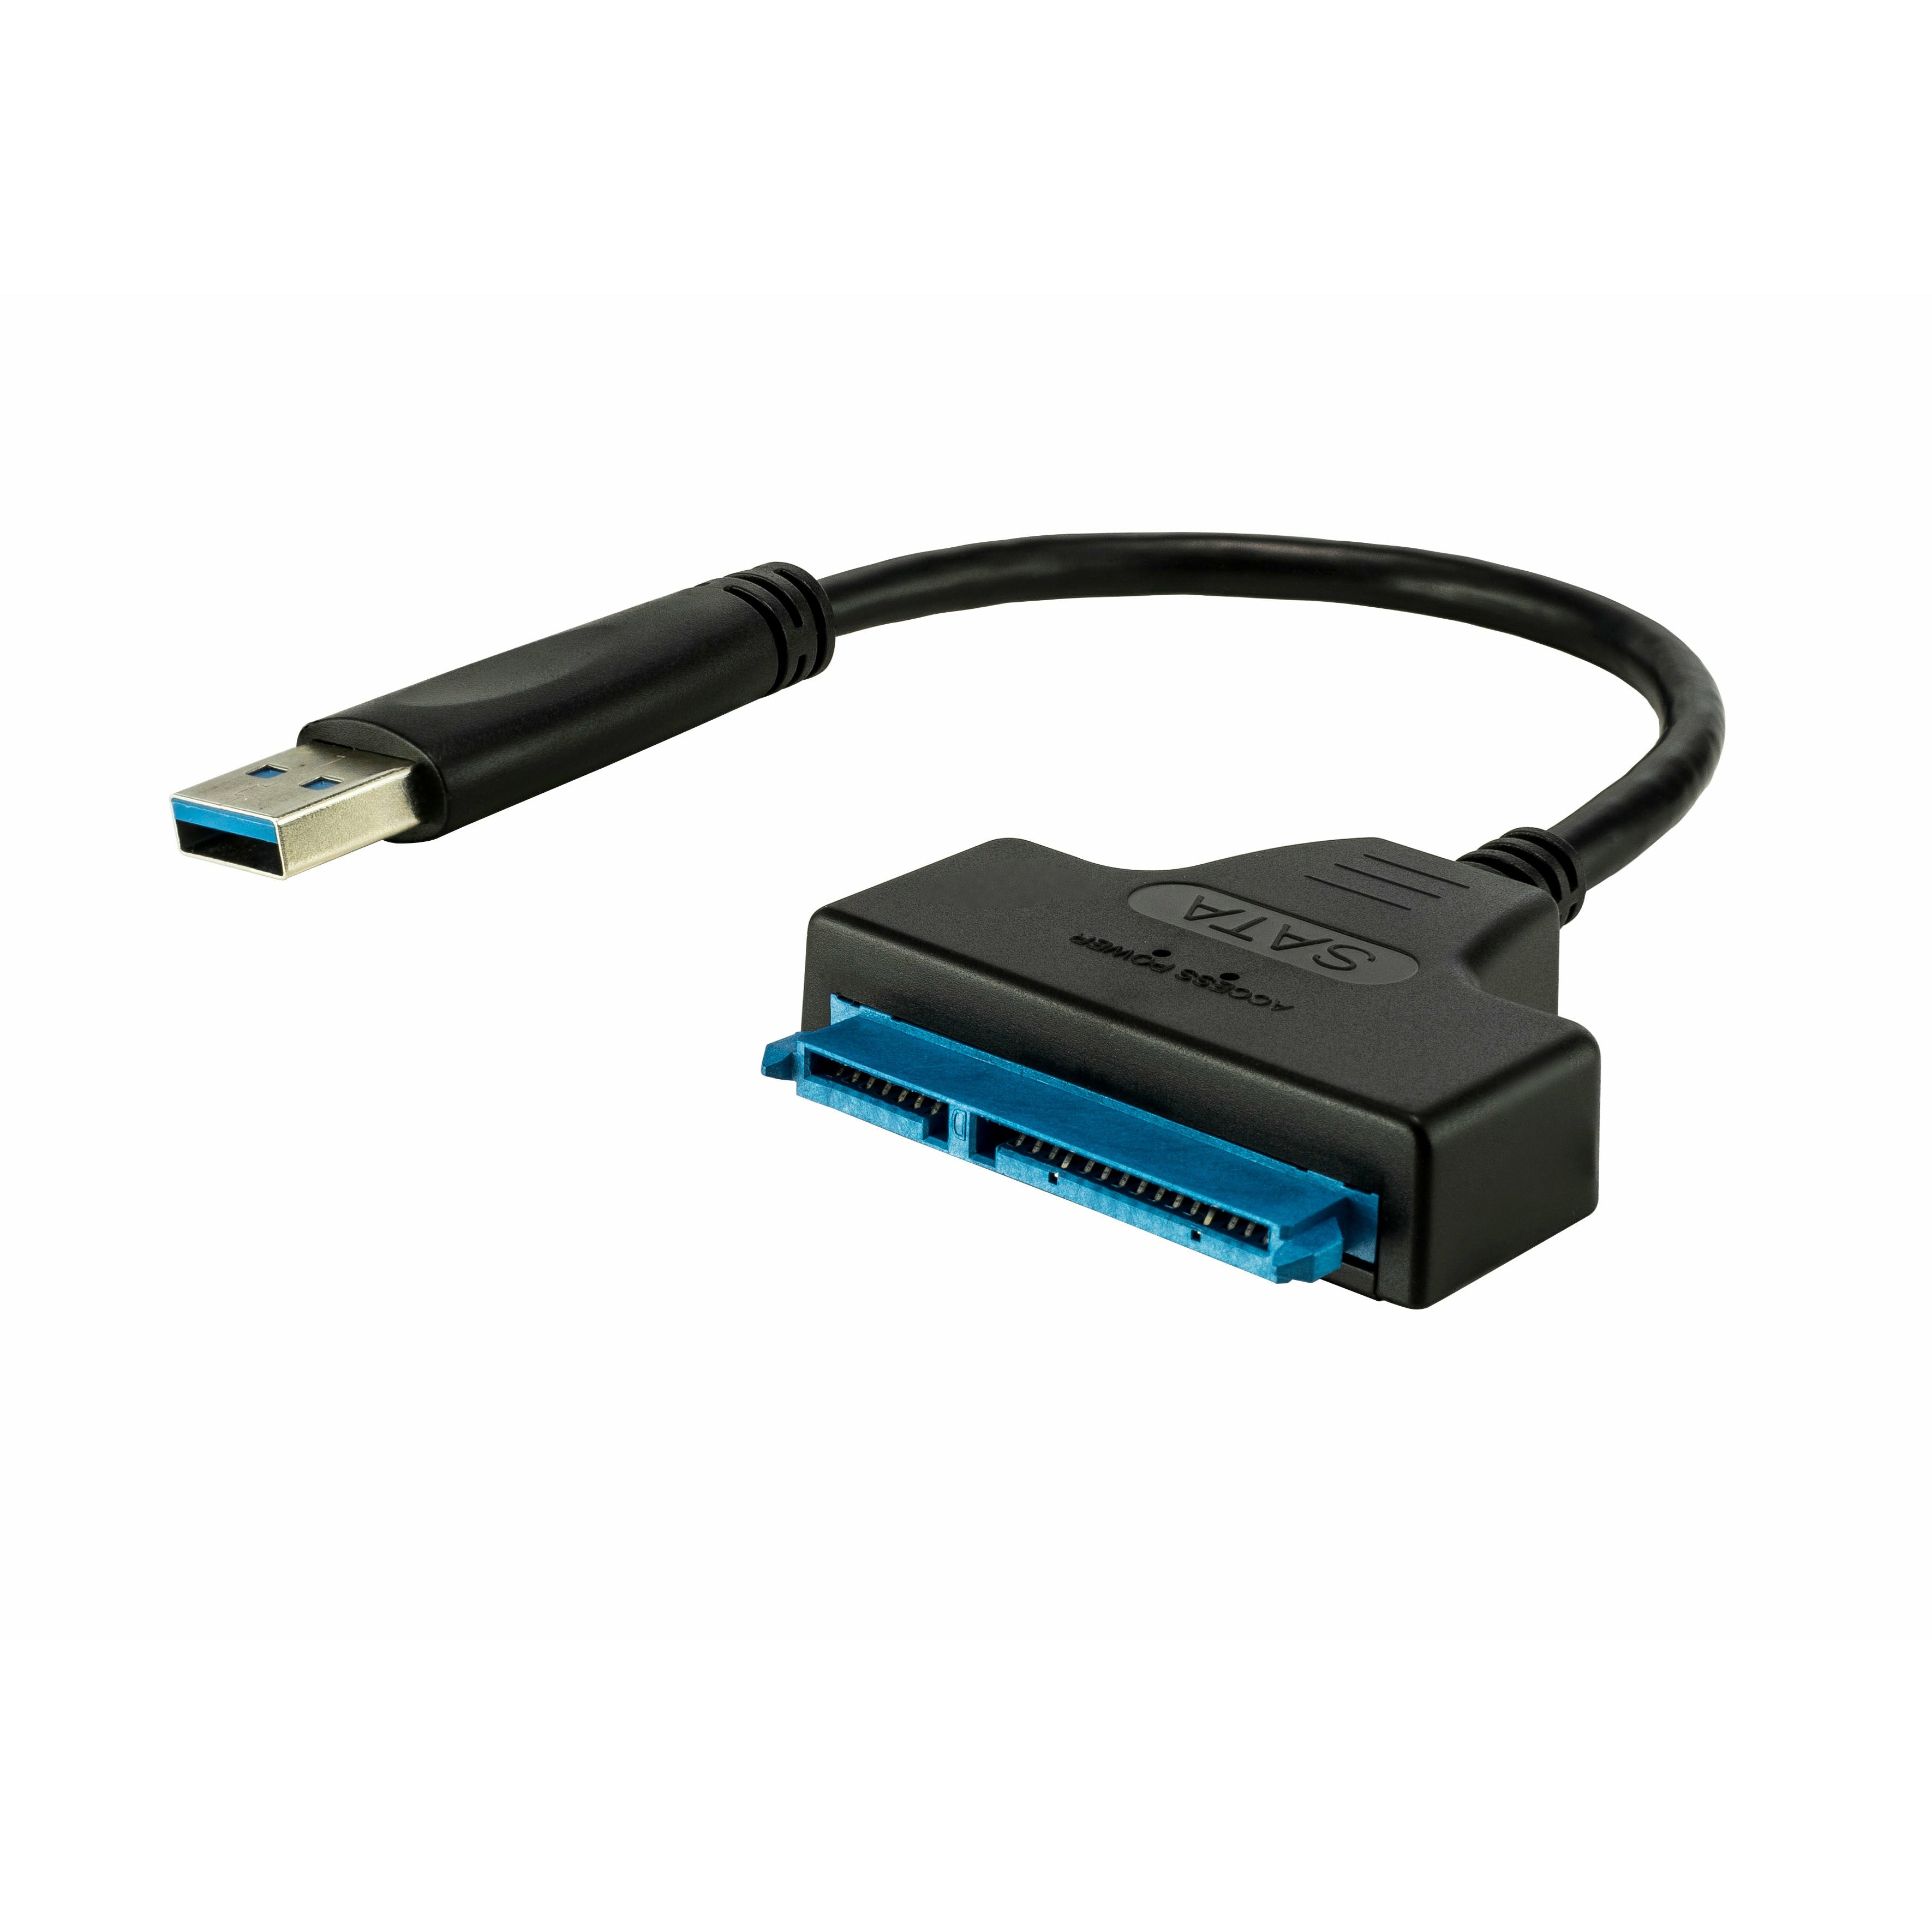 USB 3.0 SATA III Hard Adapter Cable, SATA to Adapter Cable f – Vilros.com